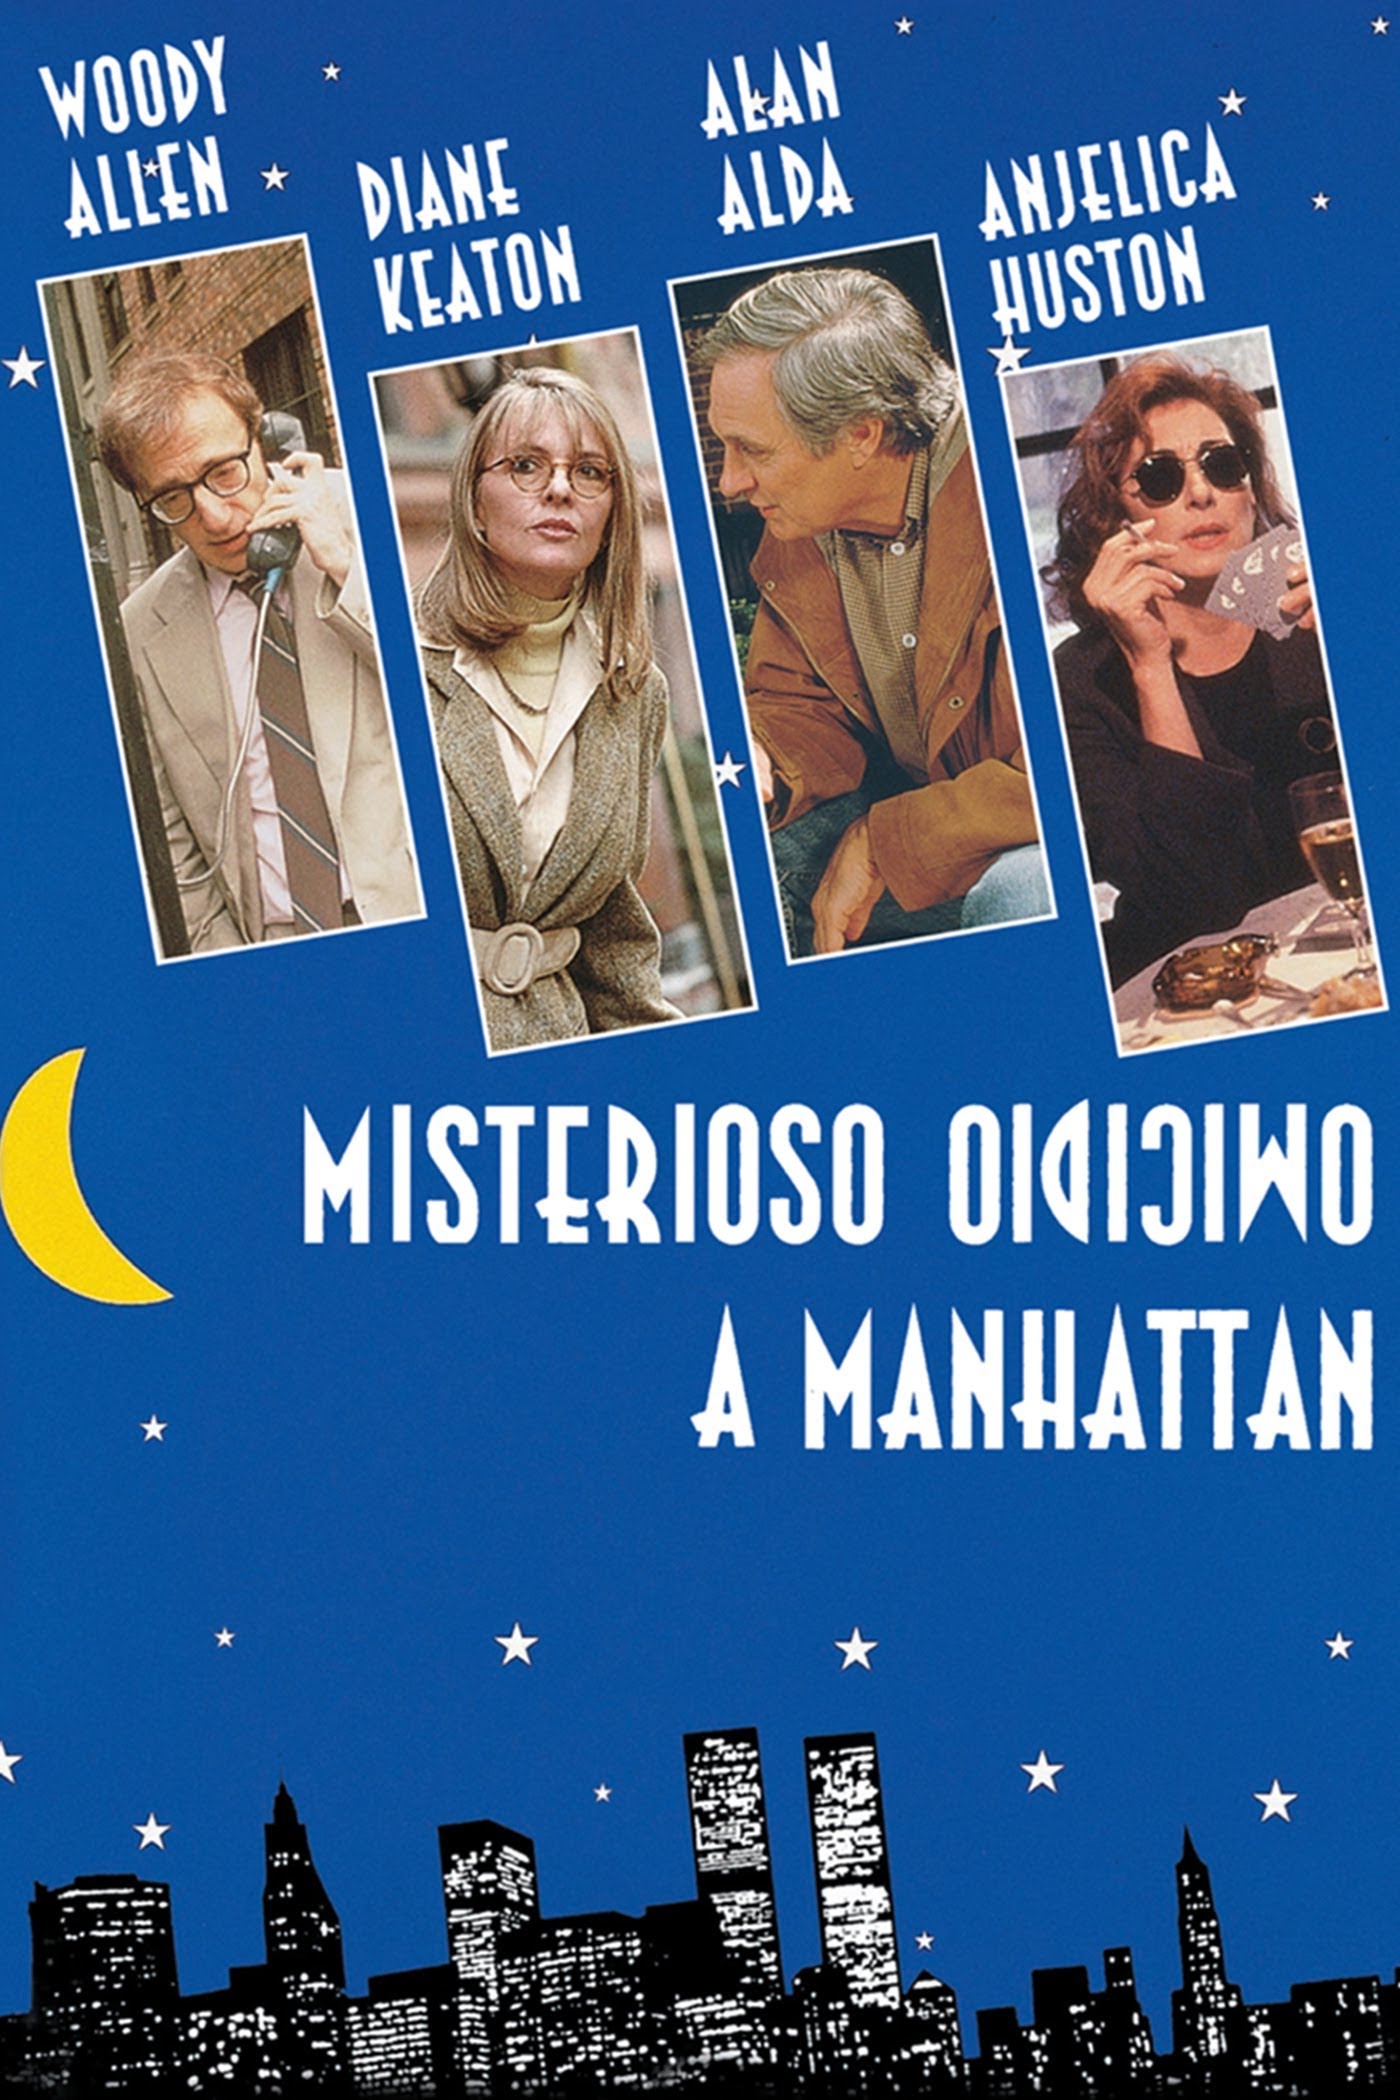 Misterioso omicidio a Manhattan [HD] (1993)